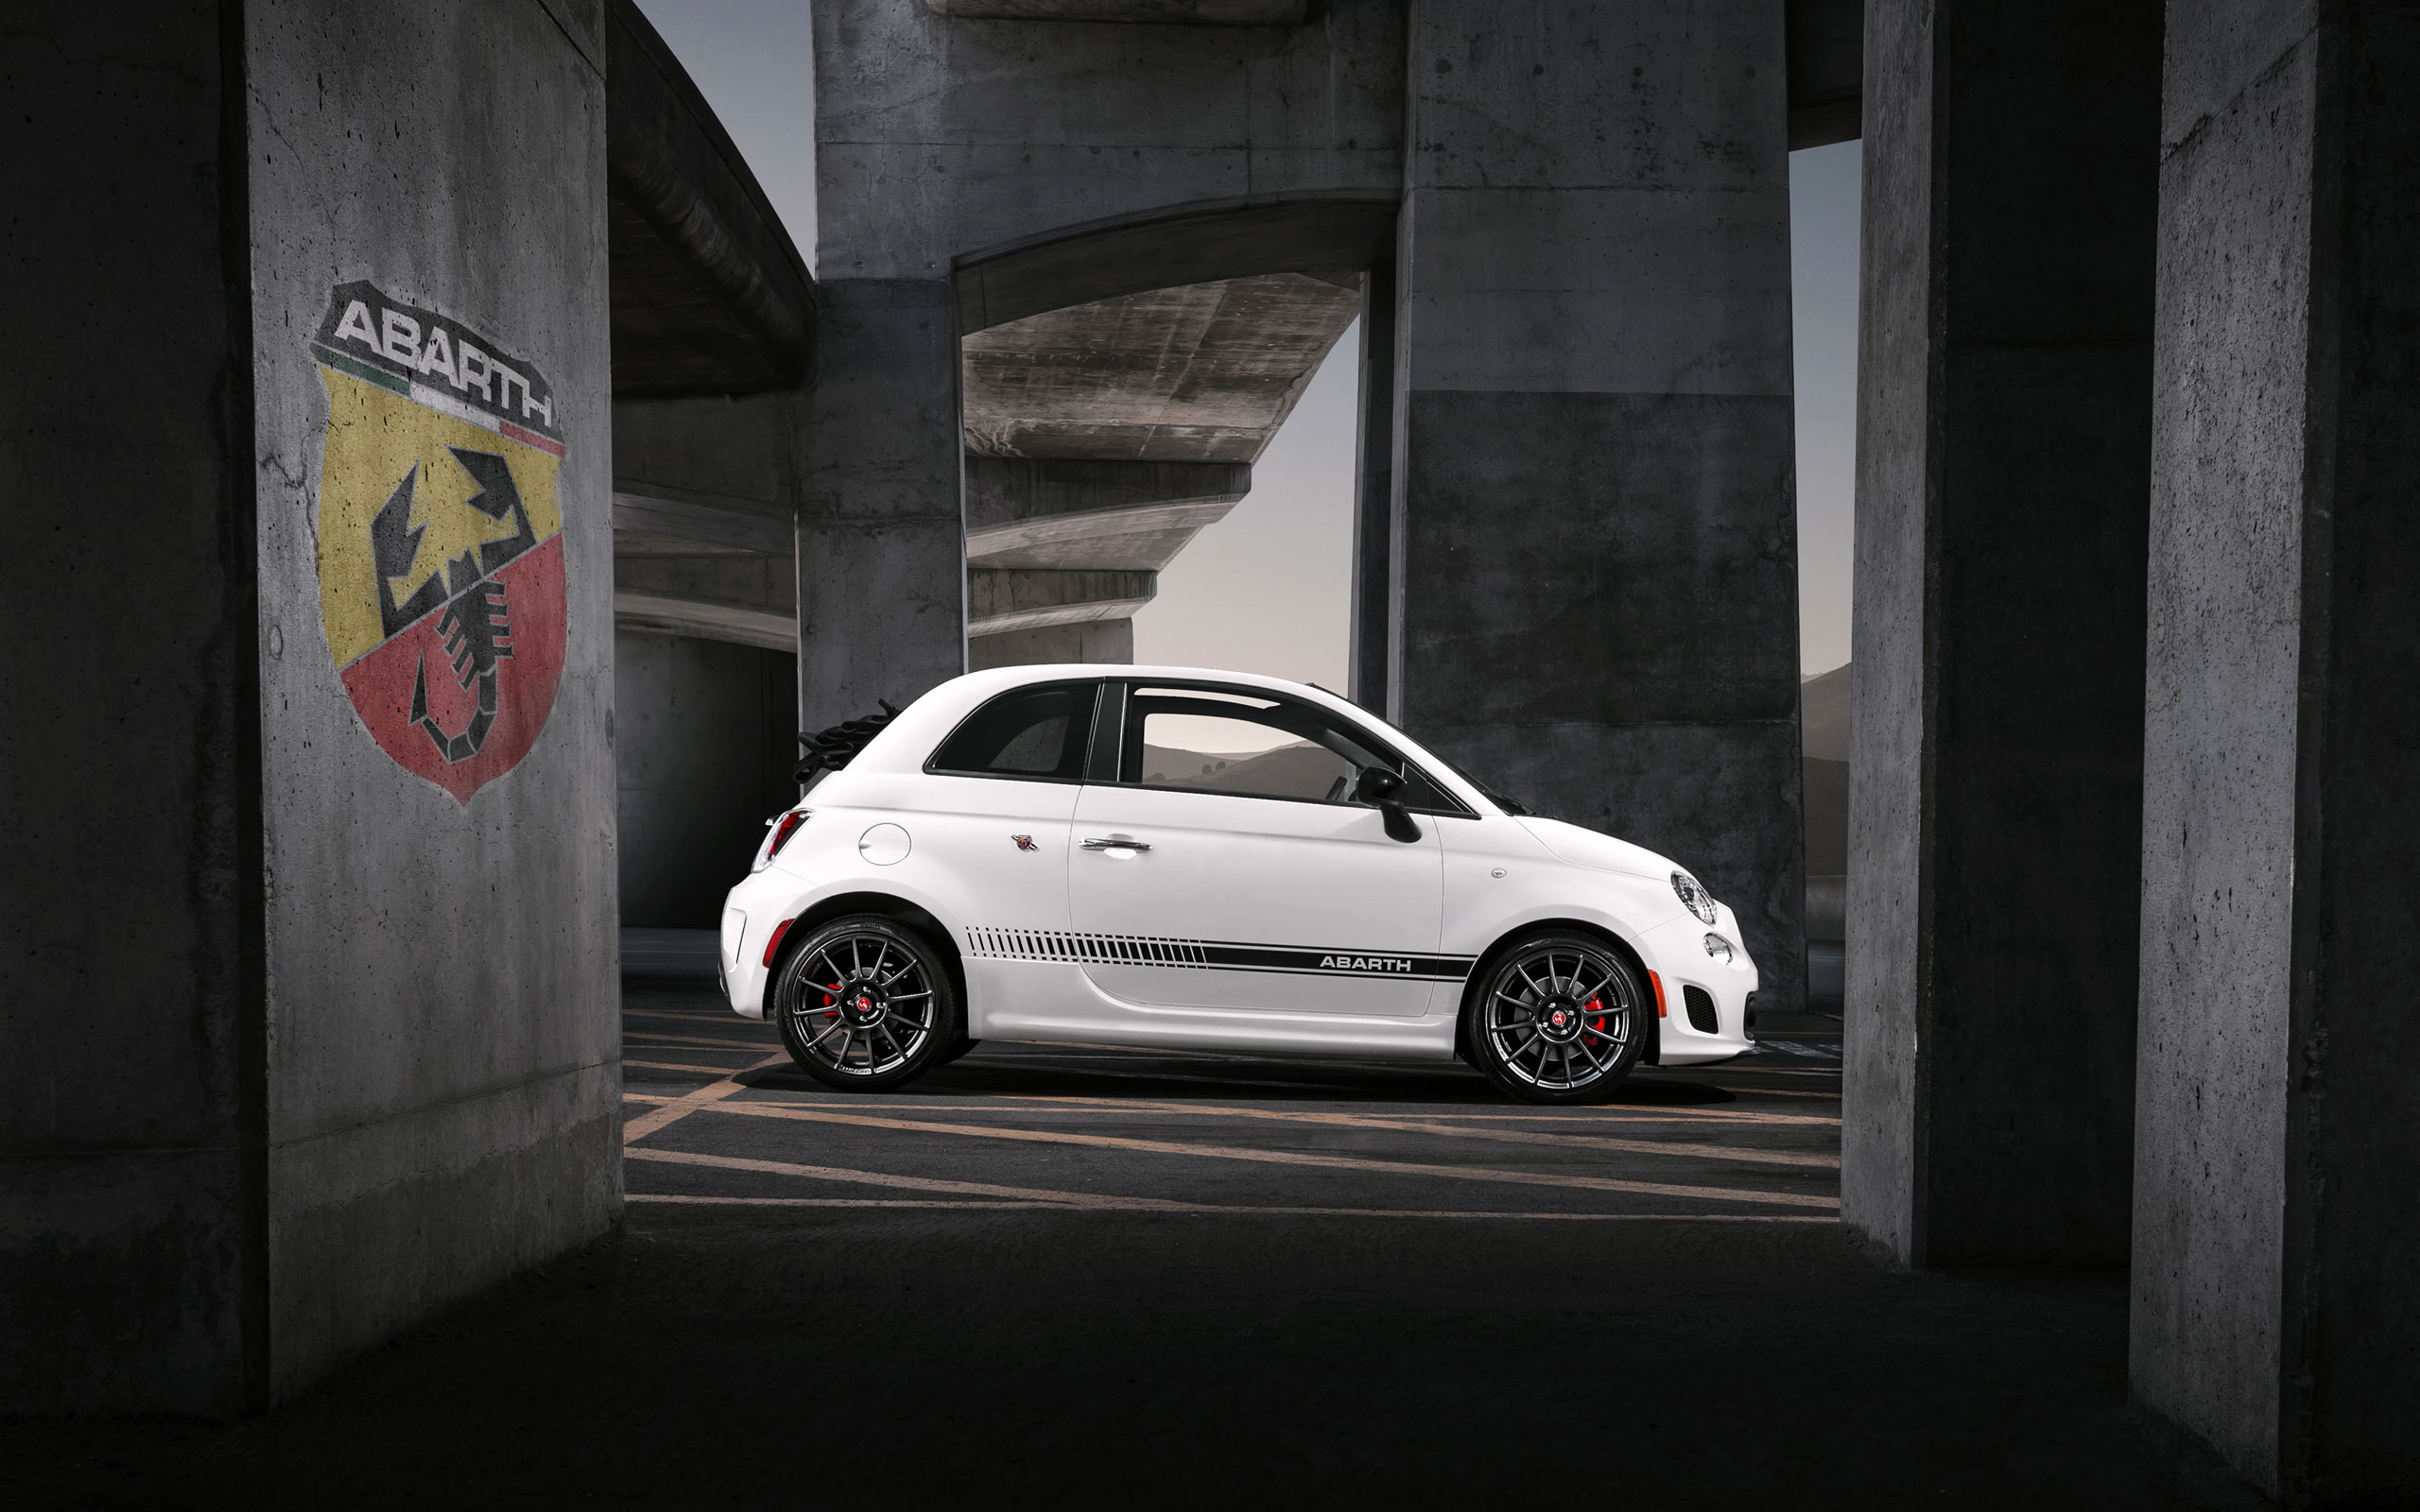  2013 Fiat 500C Abarth Wallpaper.